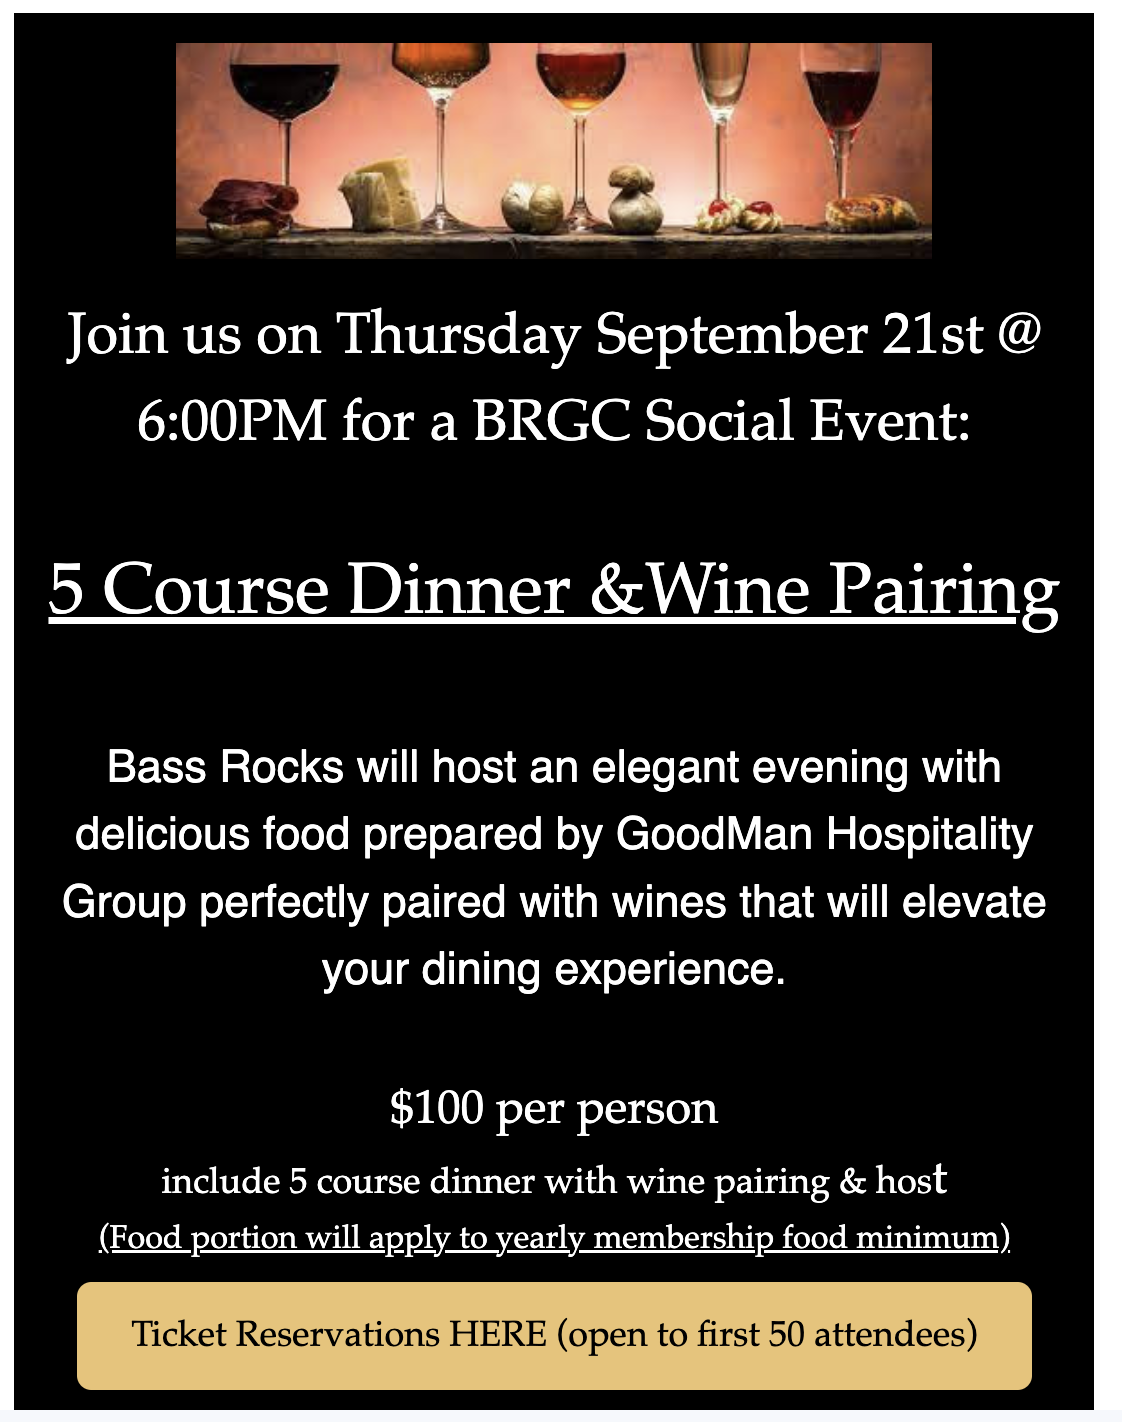 Bass Rocks Golf Club dinner and wine event invite. 